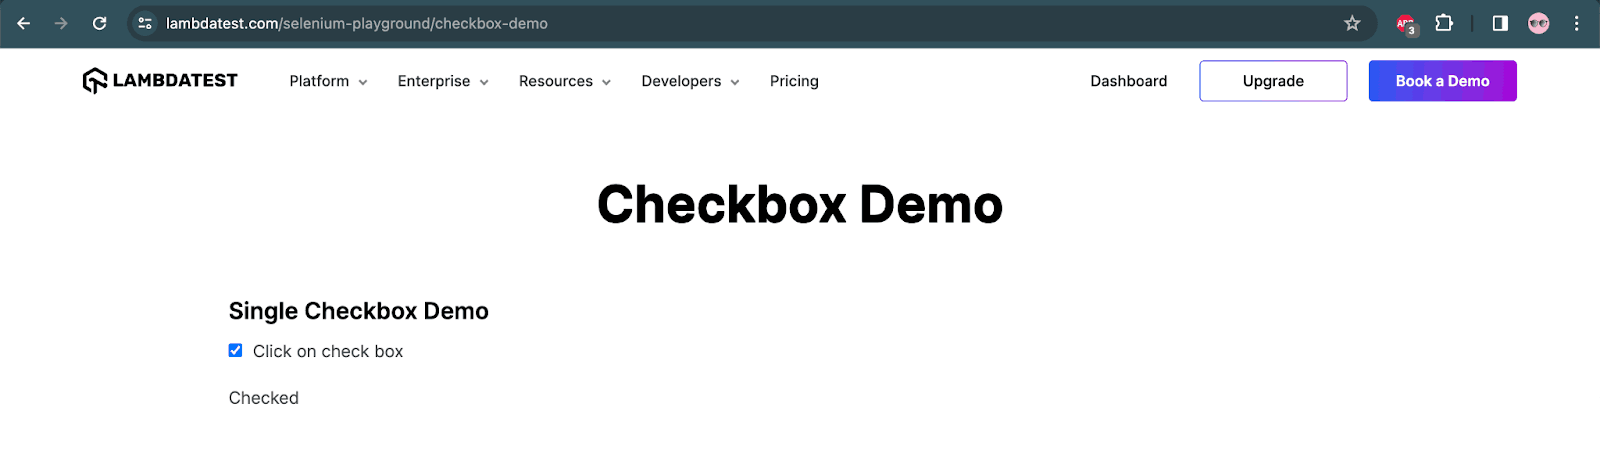 Single Checkbox Demo section